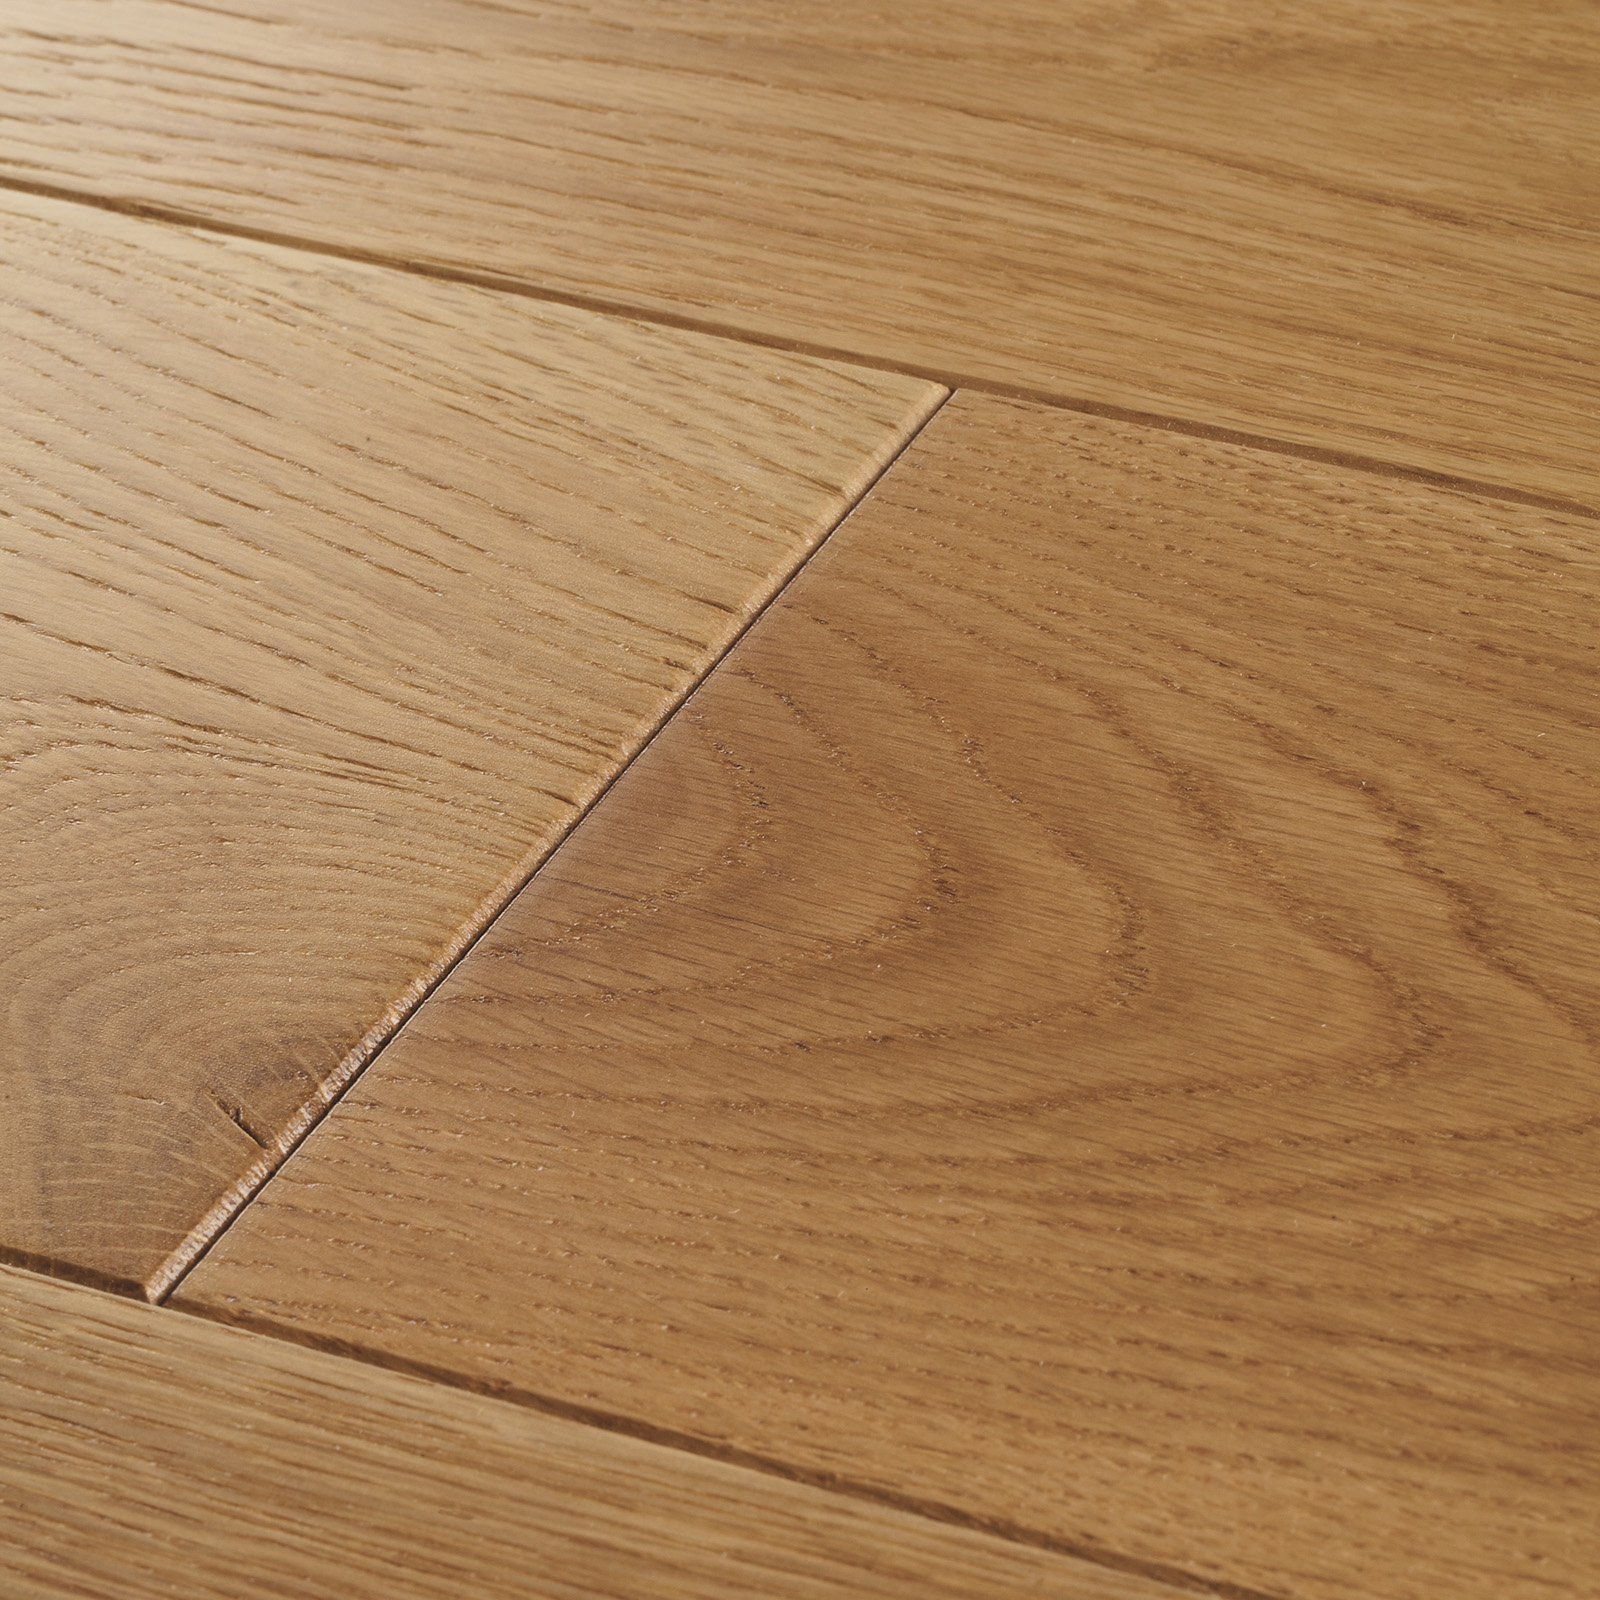 Solid wood flooring in natural tones